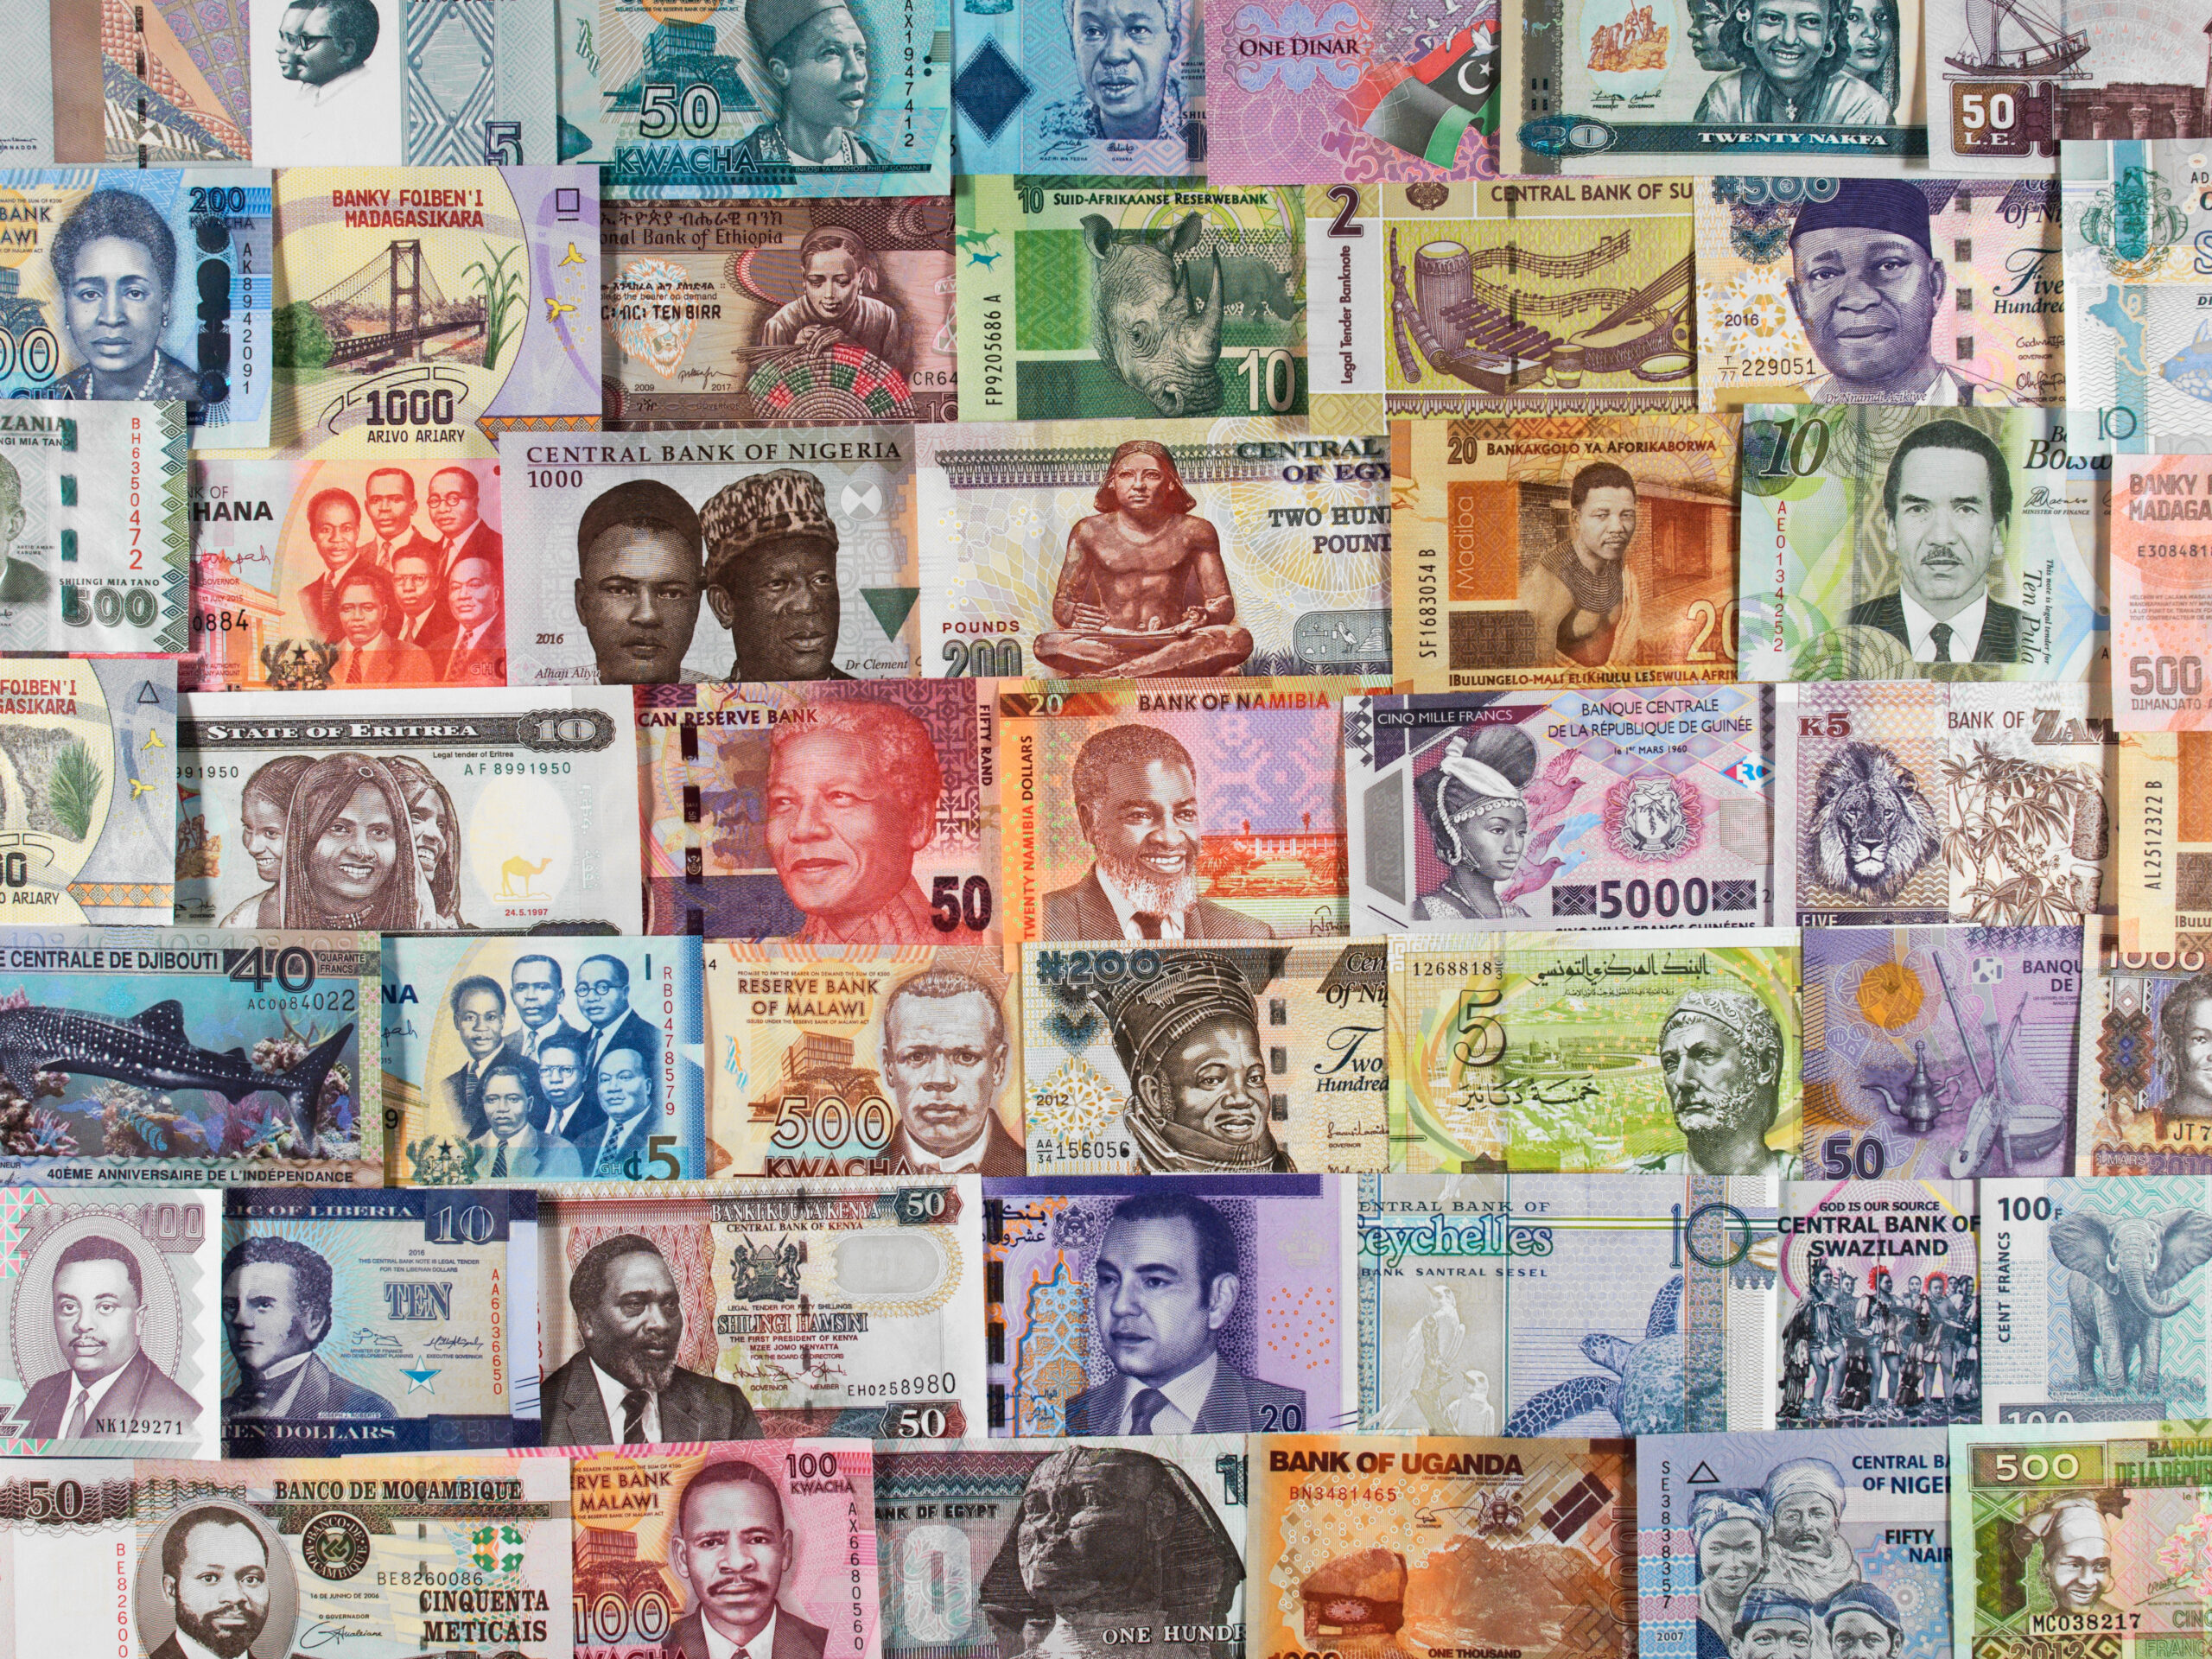 East Africa’s weakening currencies don’t improve trade balances, defying economic theories